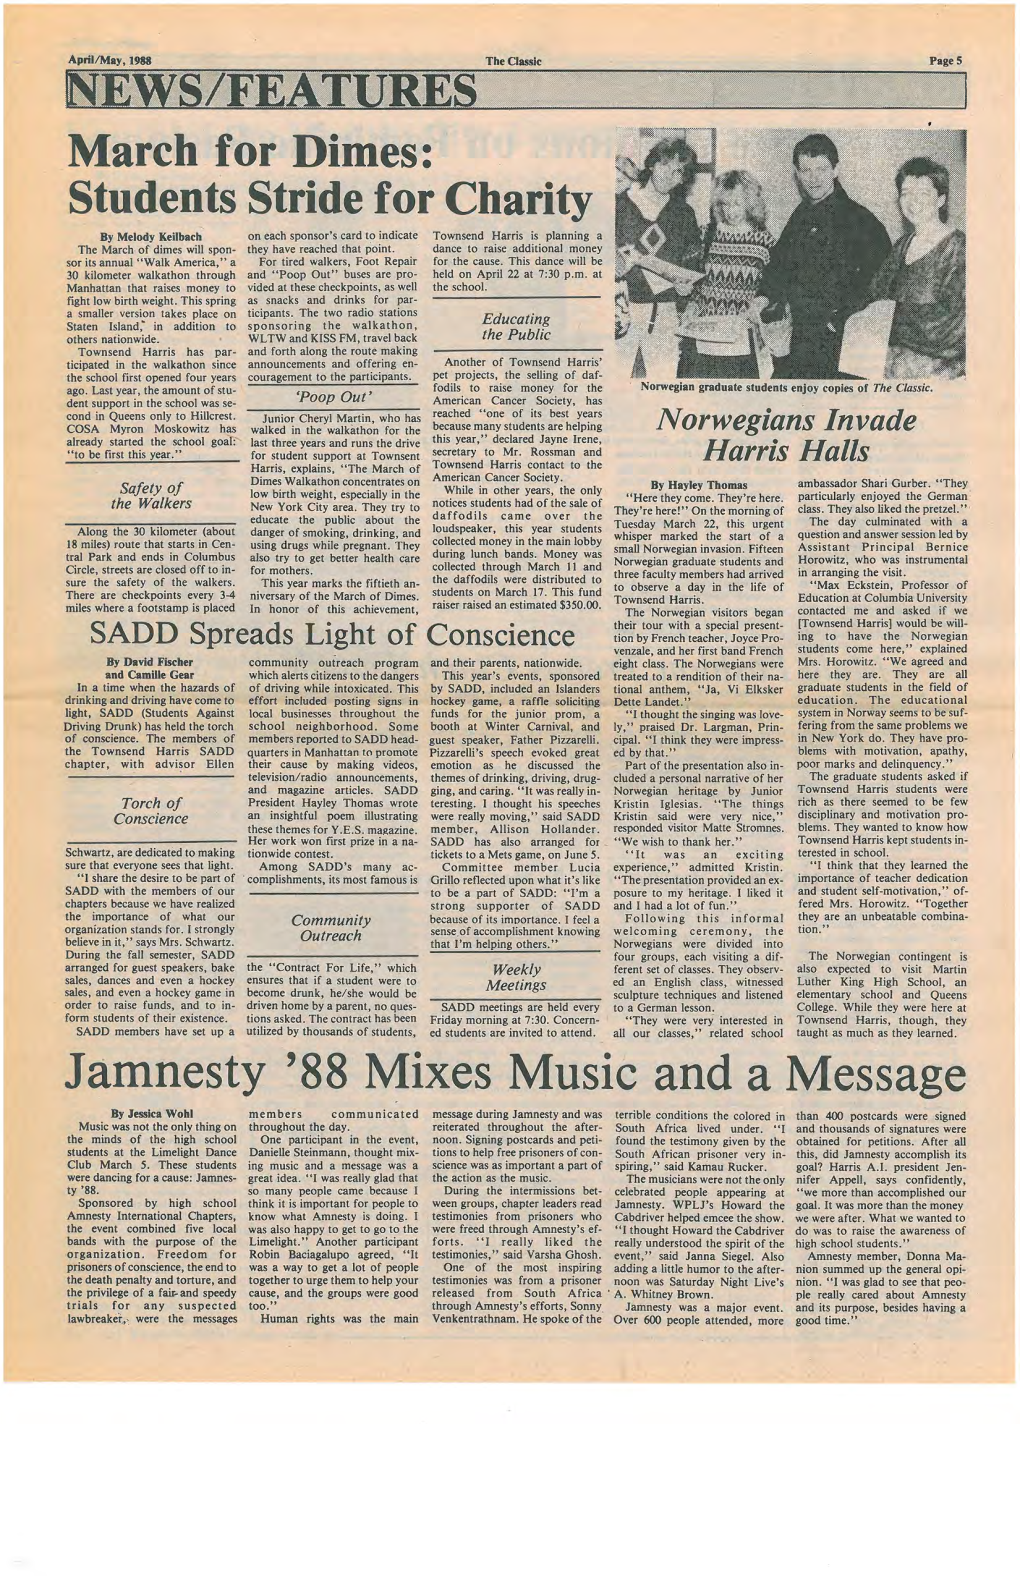 Jamnesty '88 Mixes Music and a Message